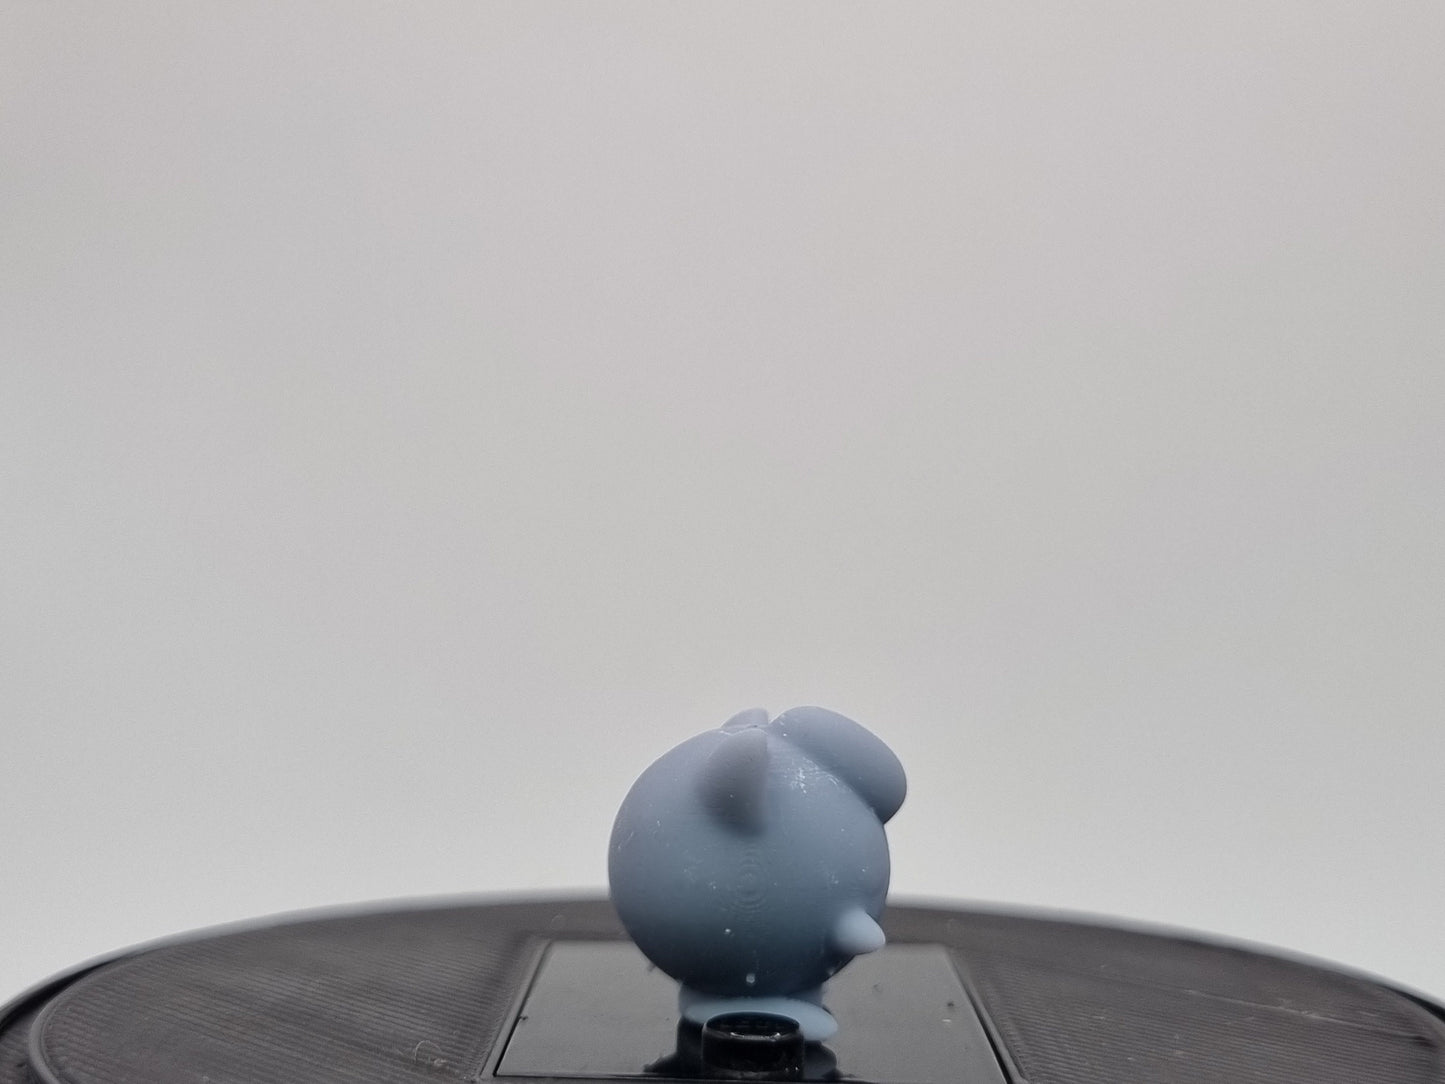 Building toy custom 3D printed fluffy animal!